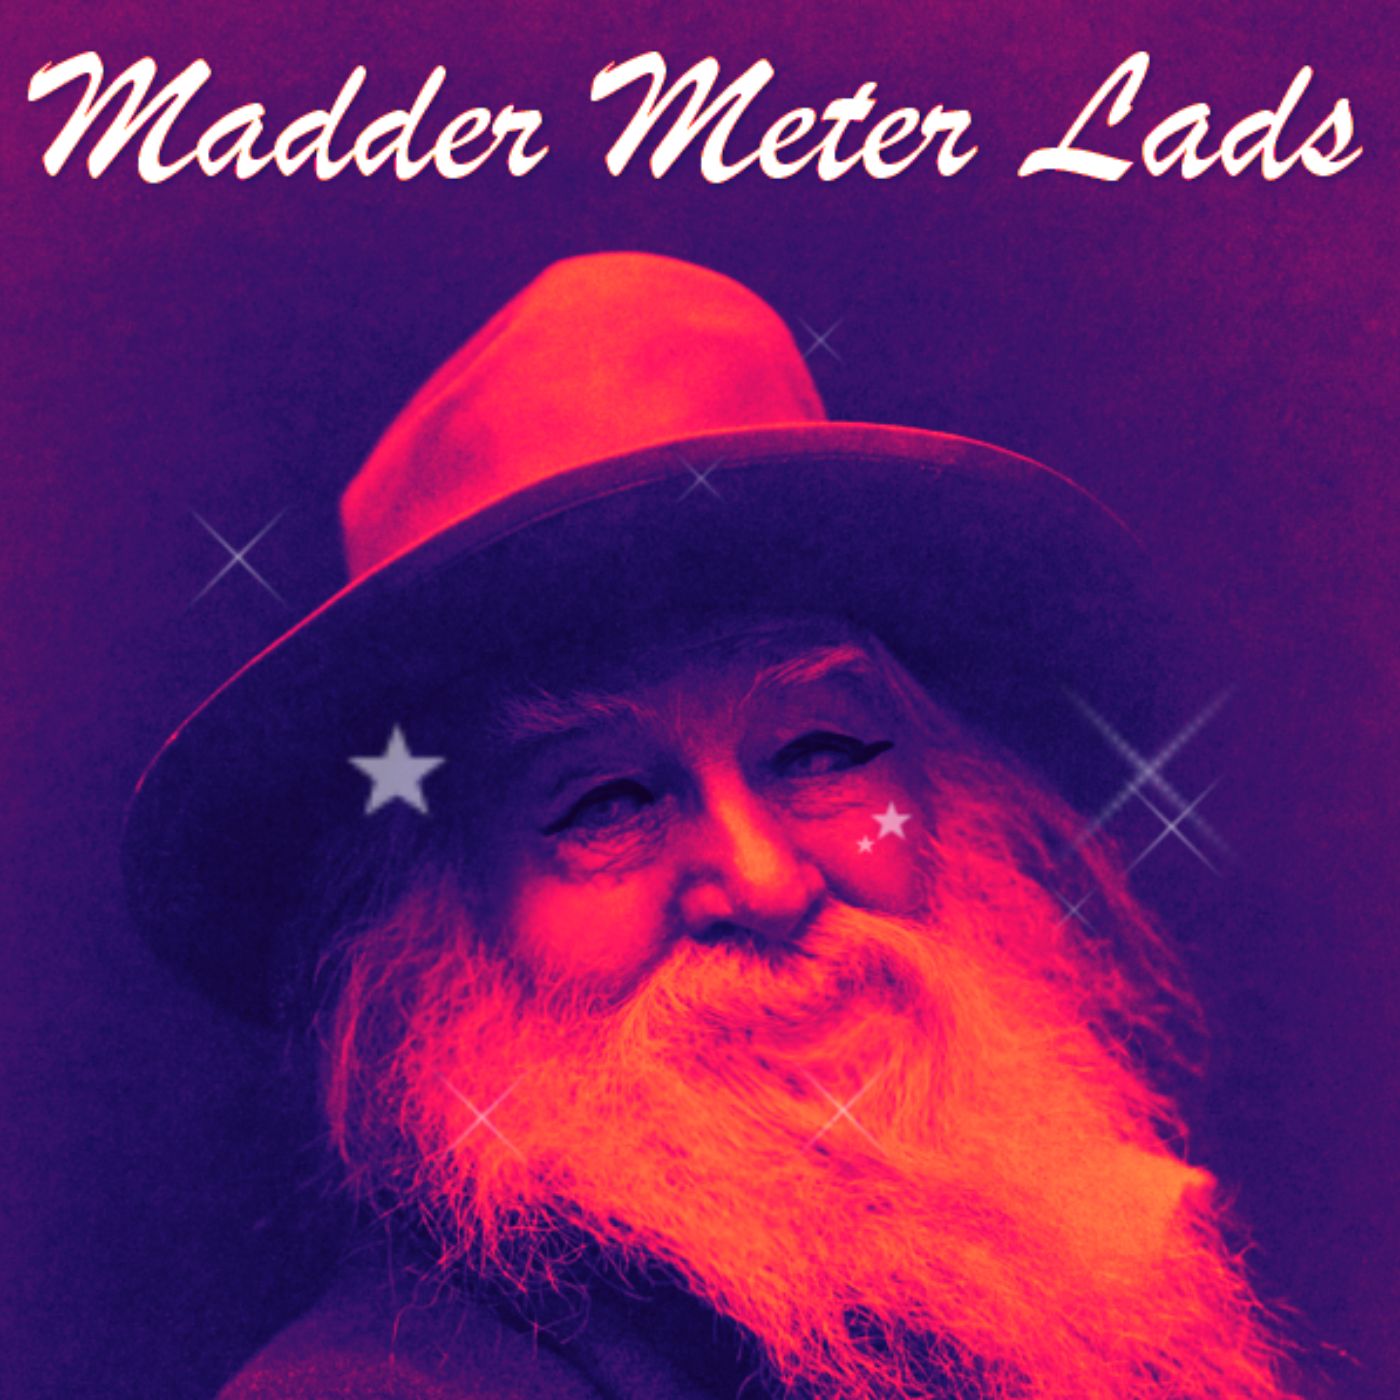 Madder Meter Lads